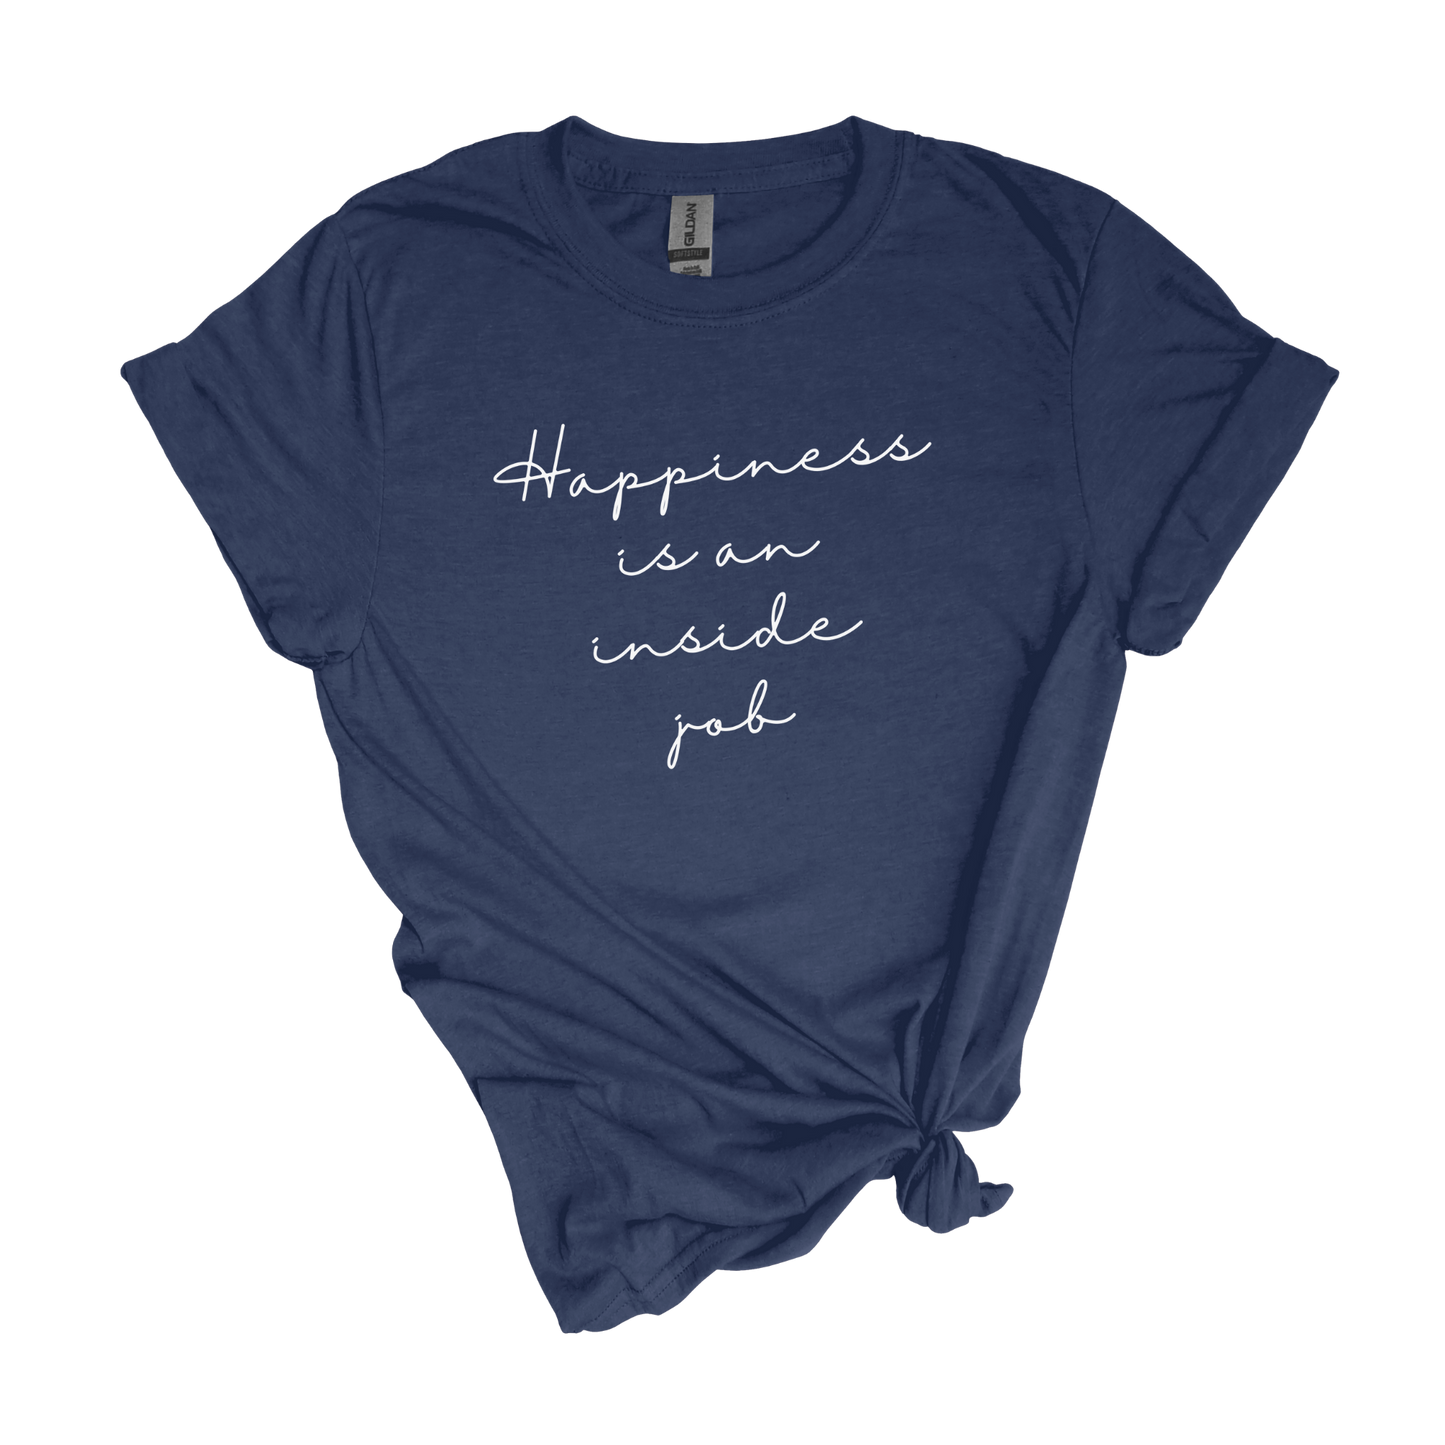 Happiness is an inside job - Adult Unisex Soft Inspirational T-shirt